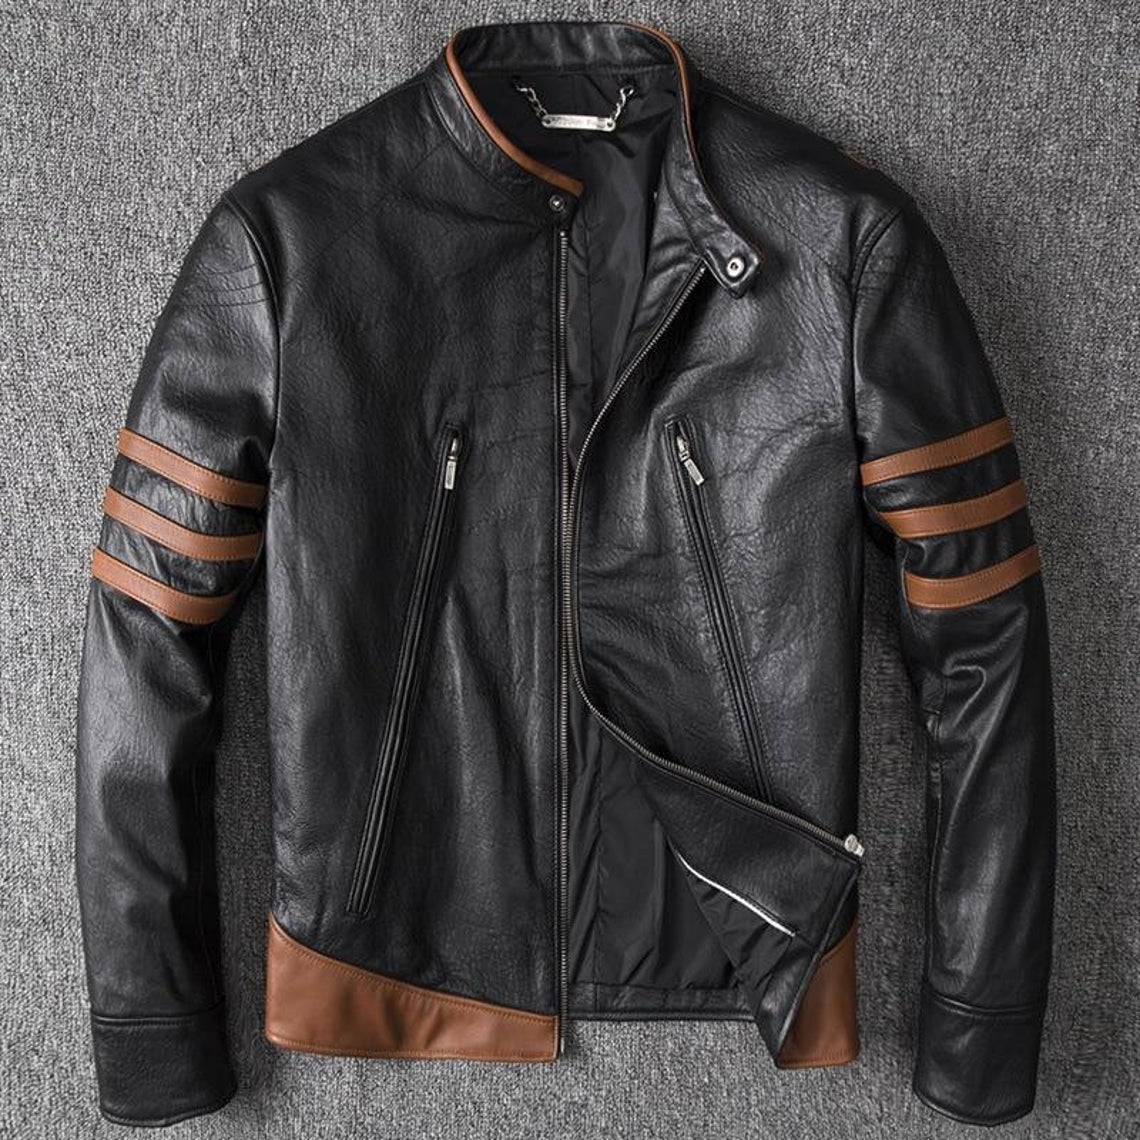 X-men Striped Inspired Black Biker Leather Jacket Costume - Real ...